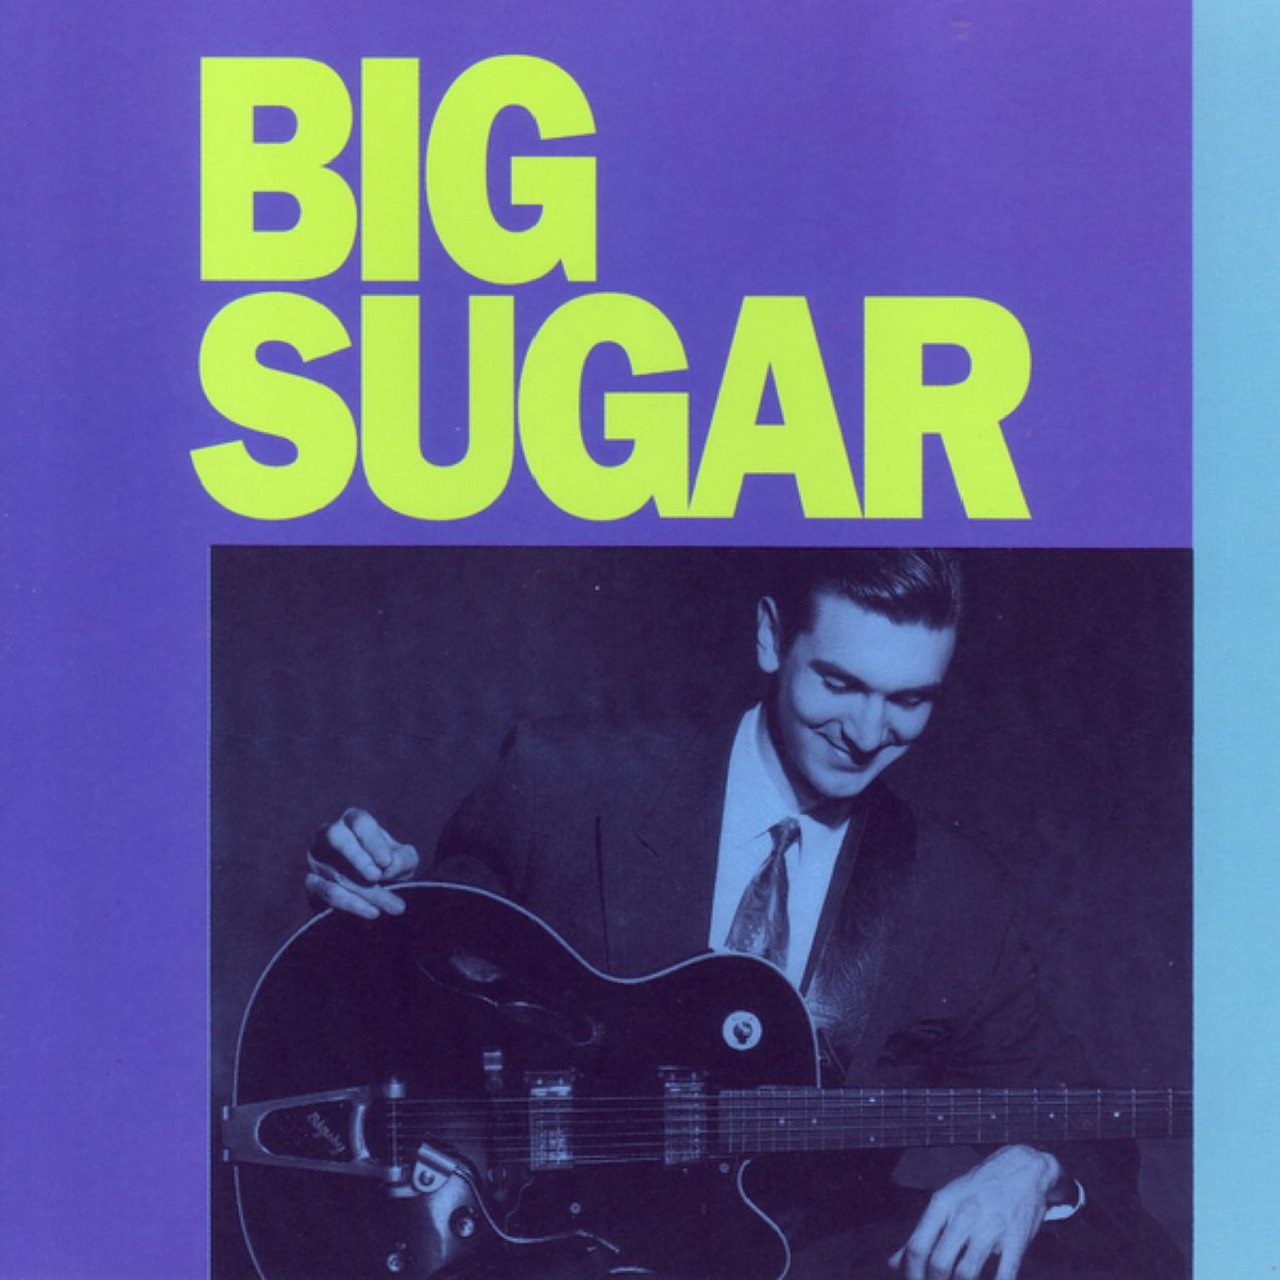 Big Sugar - Big Sugar cover album